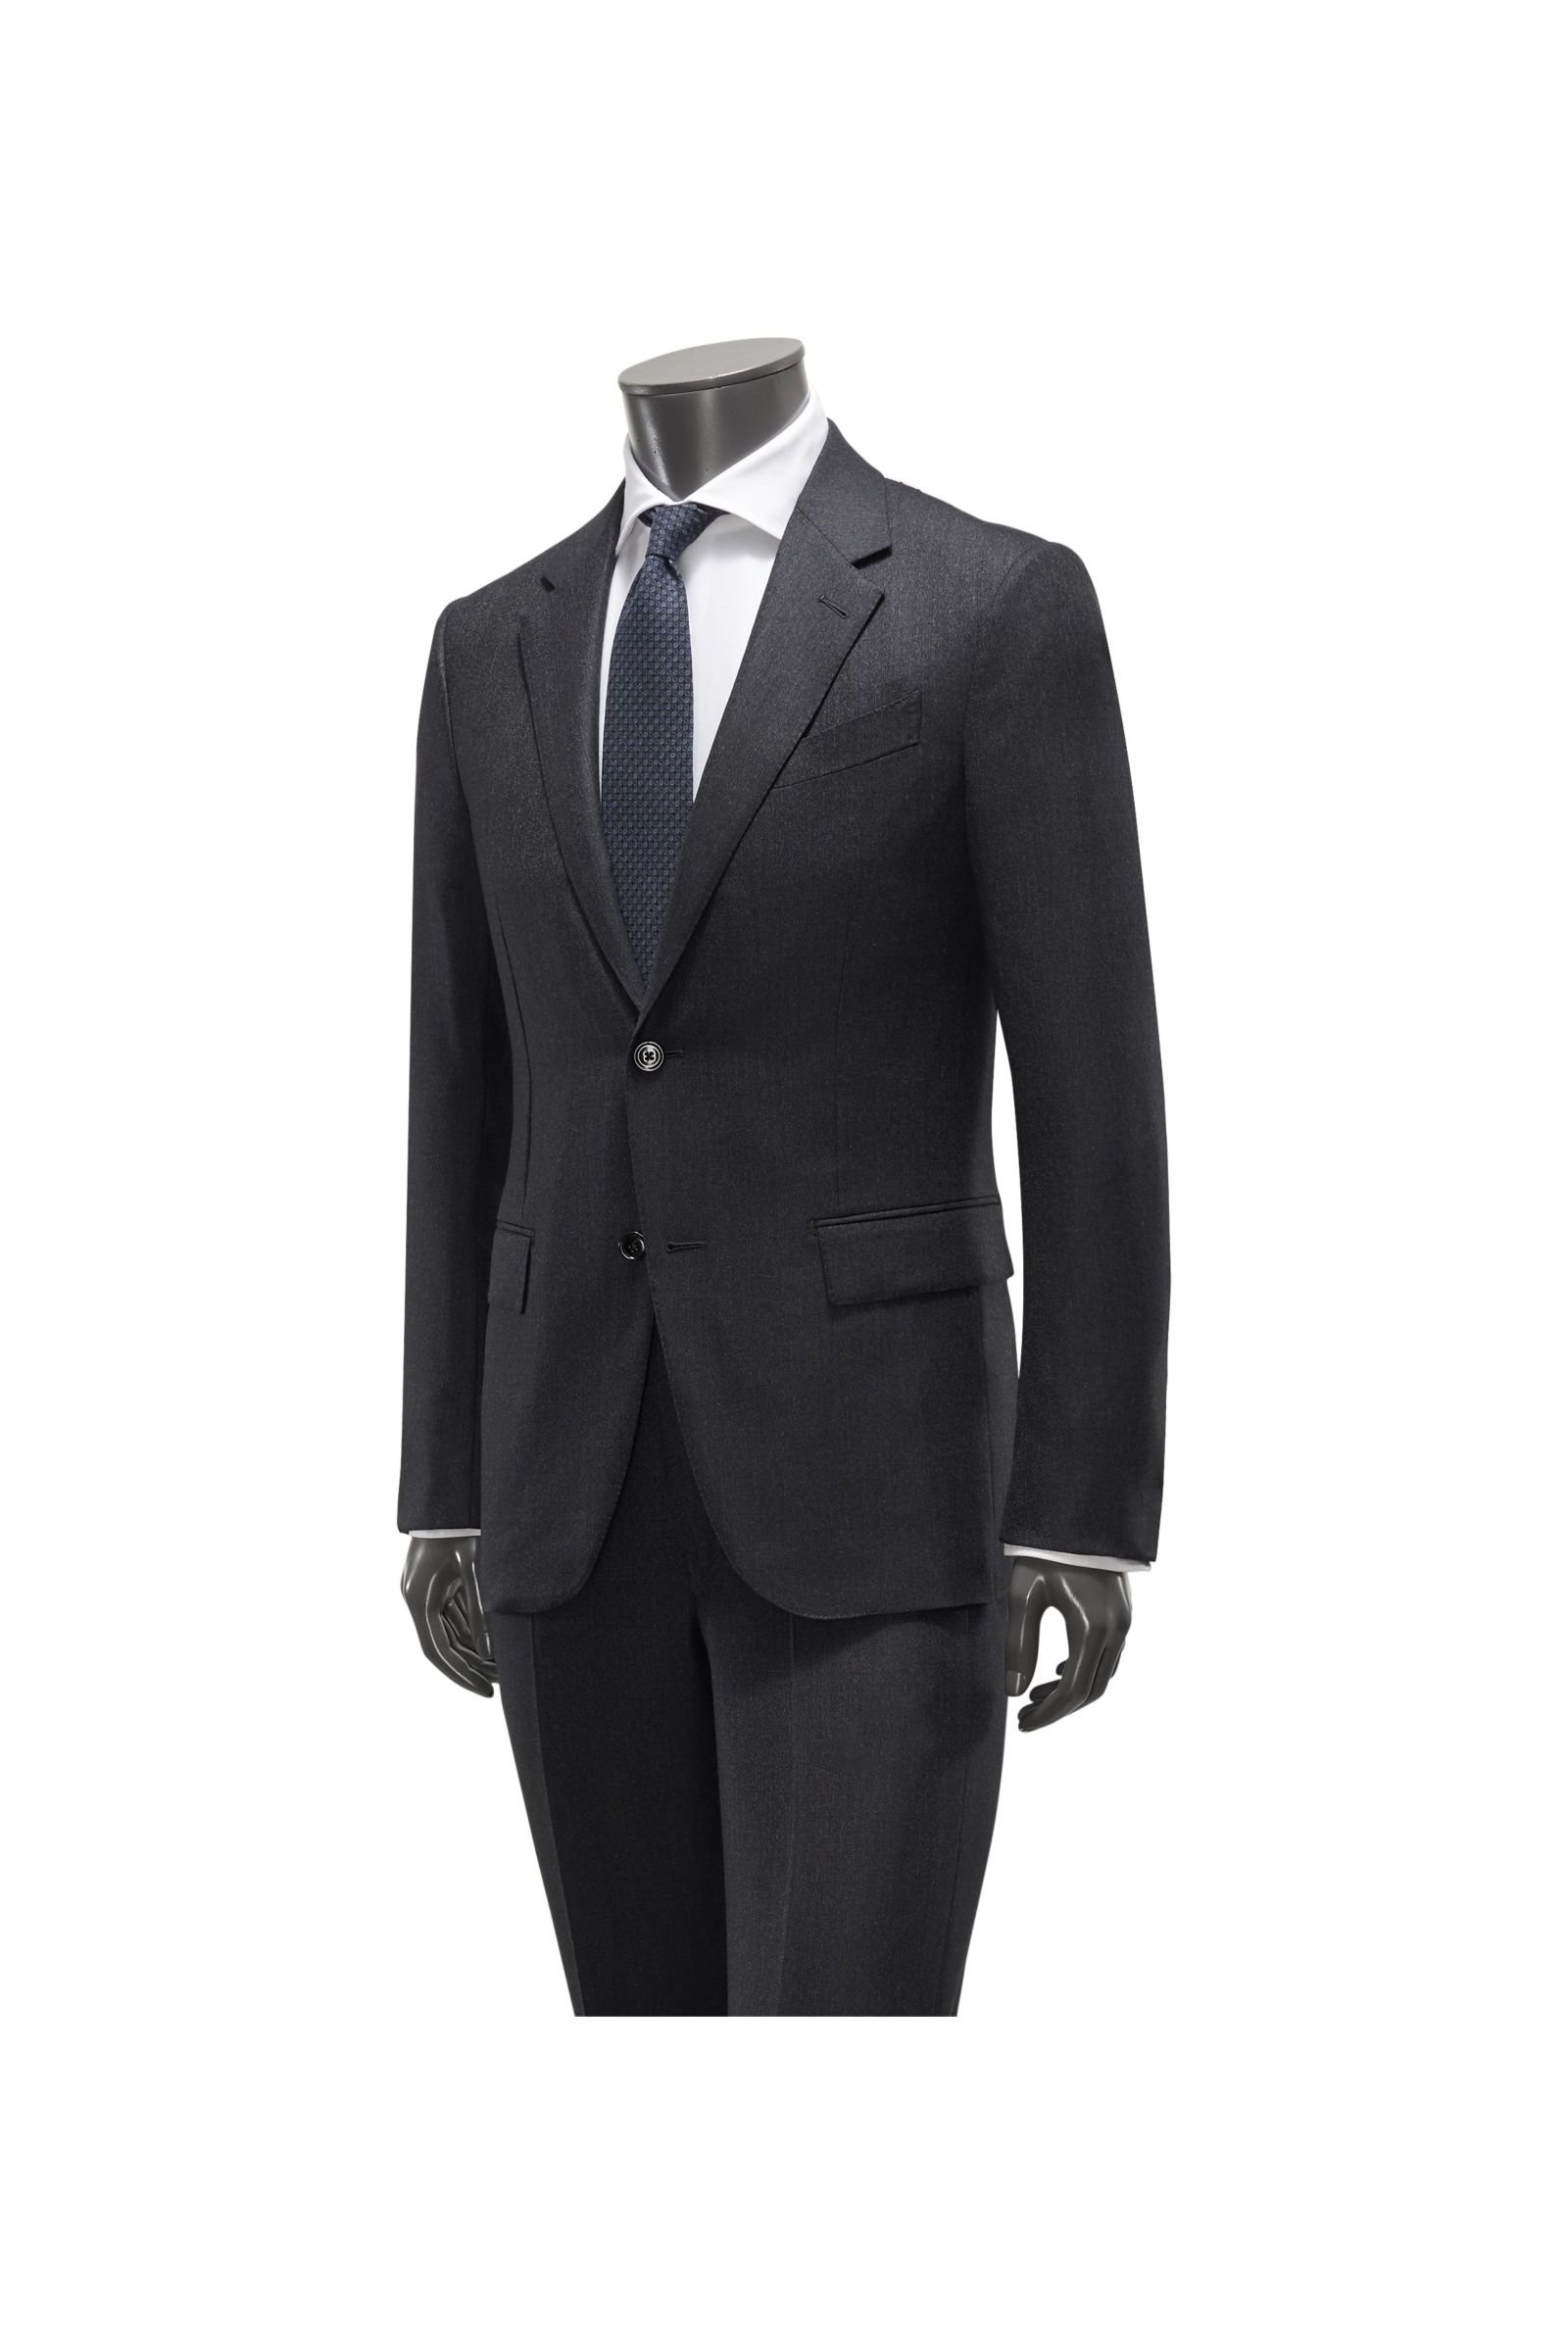 Suit 'Milano Easy' anthracite